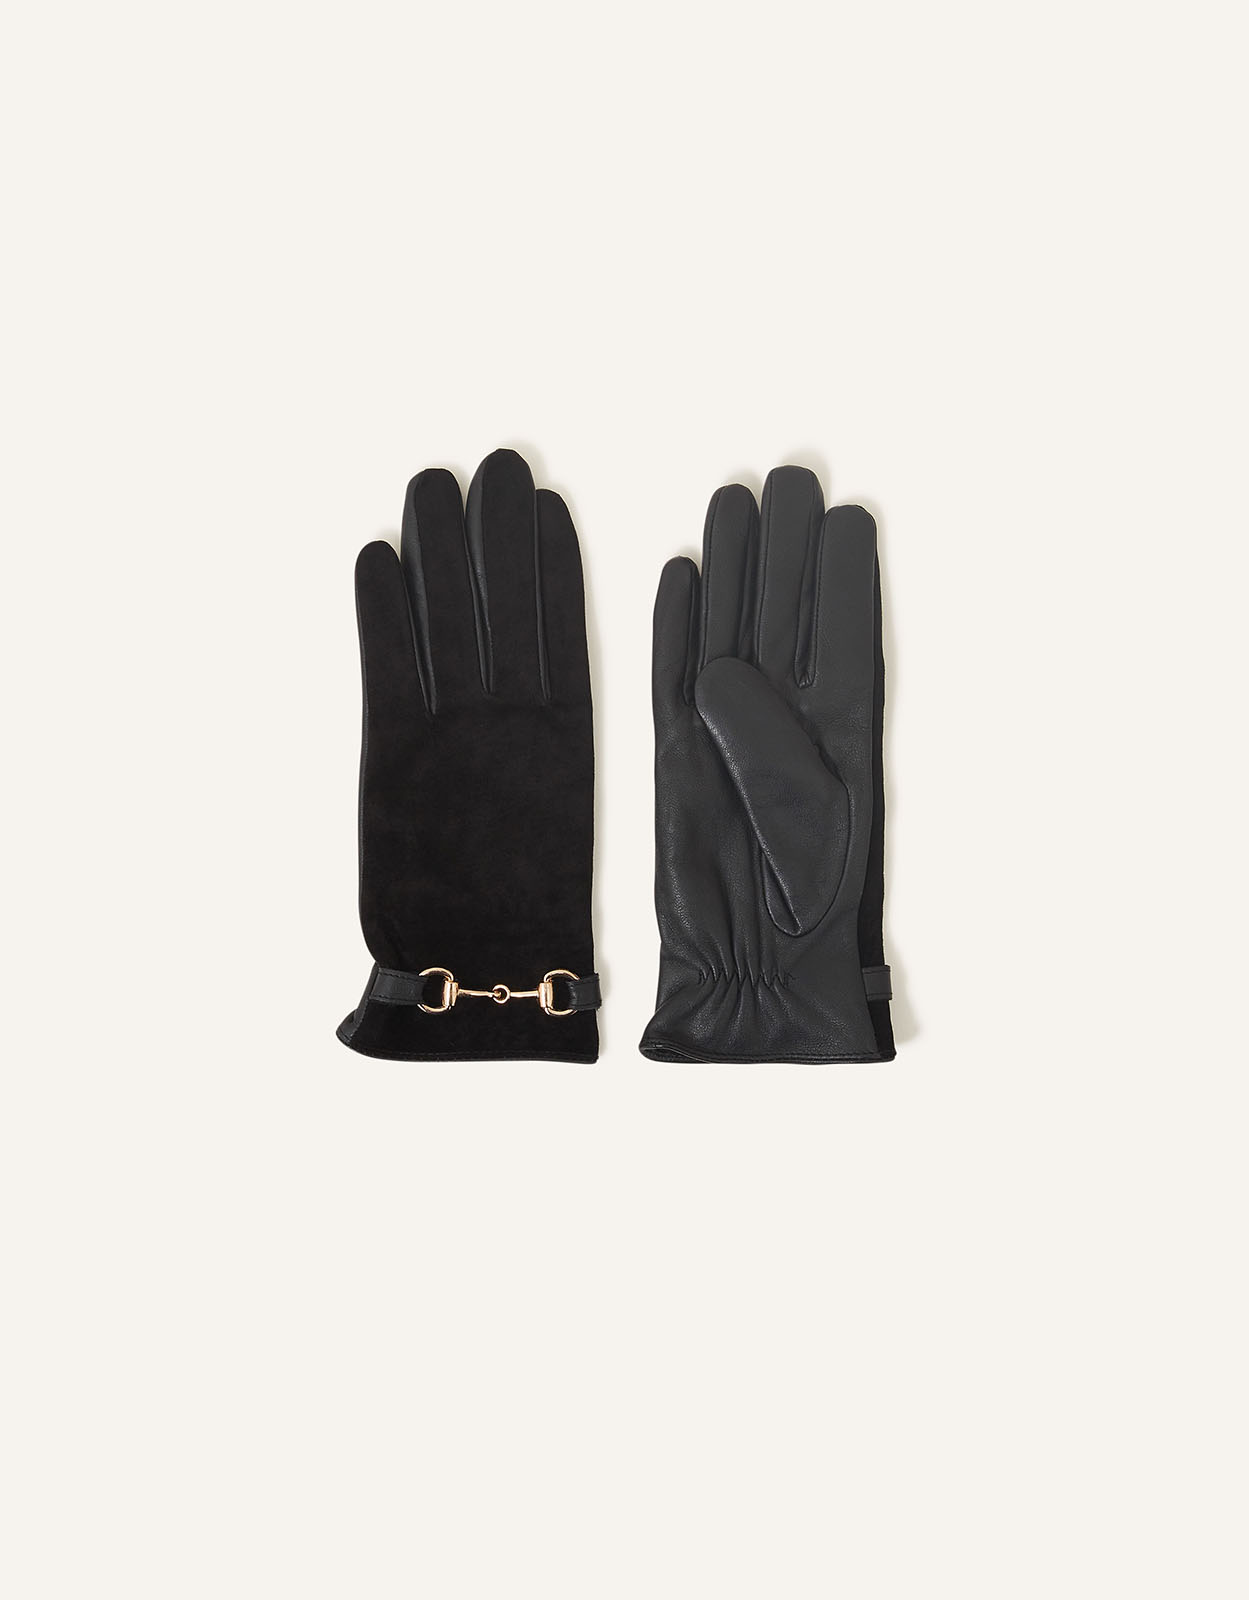 Accessorize Women's Leather Horsebit Gloves Black, Size: One Size